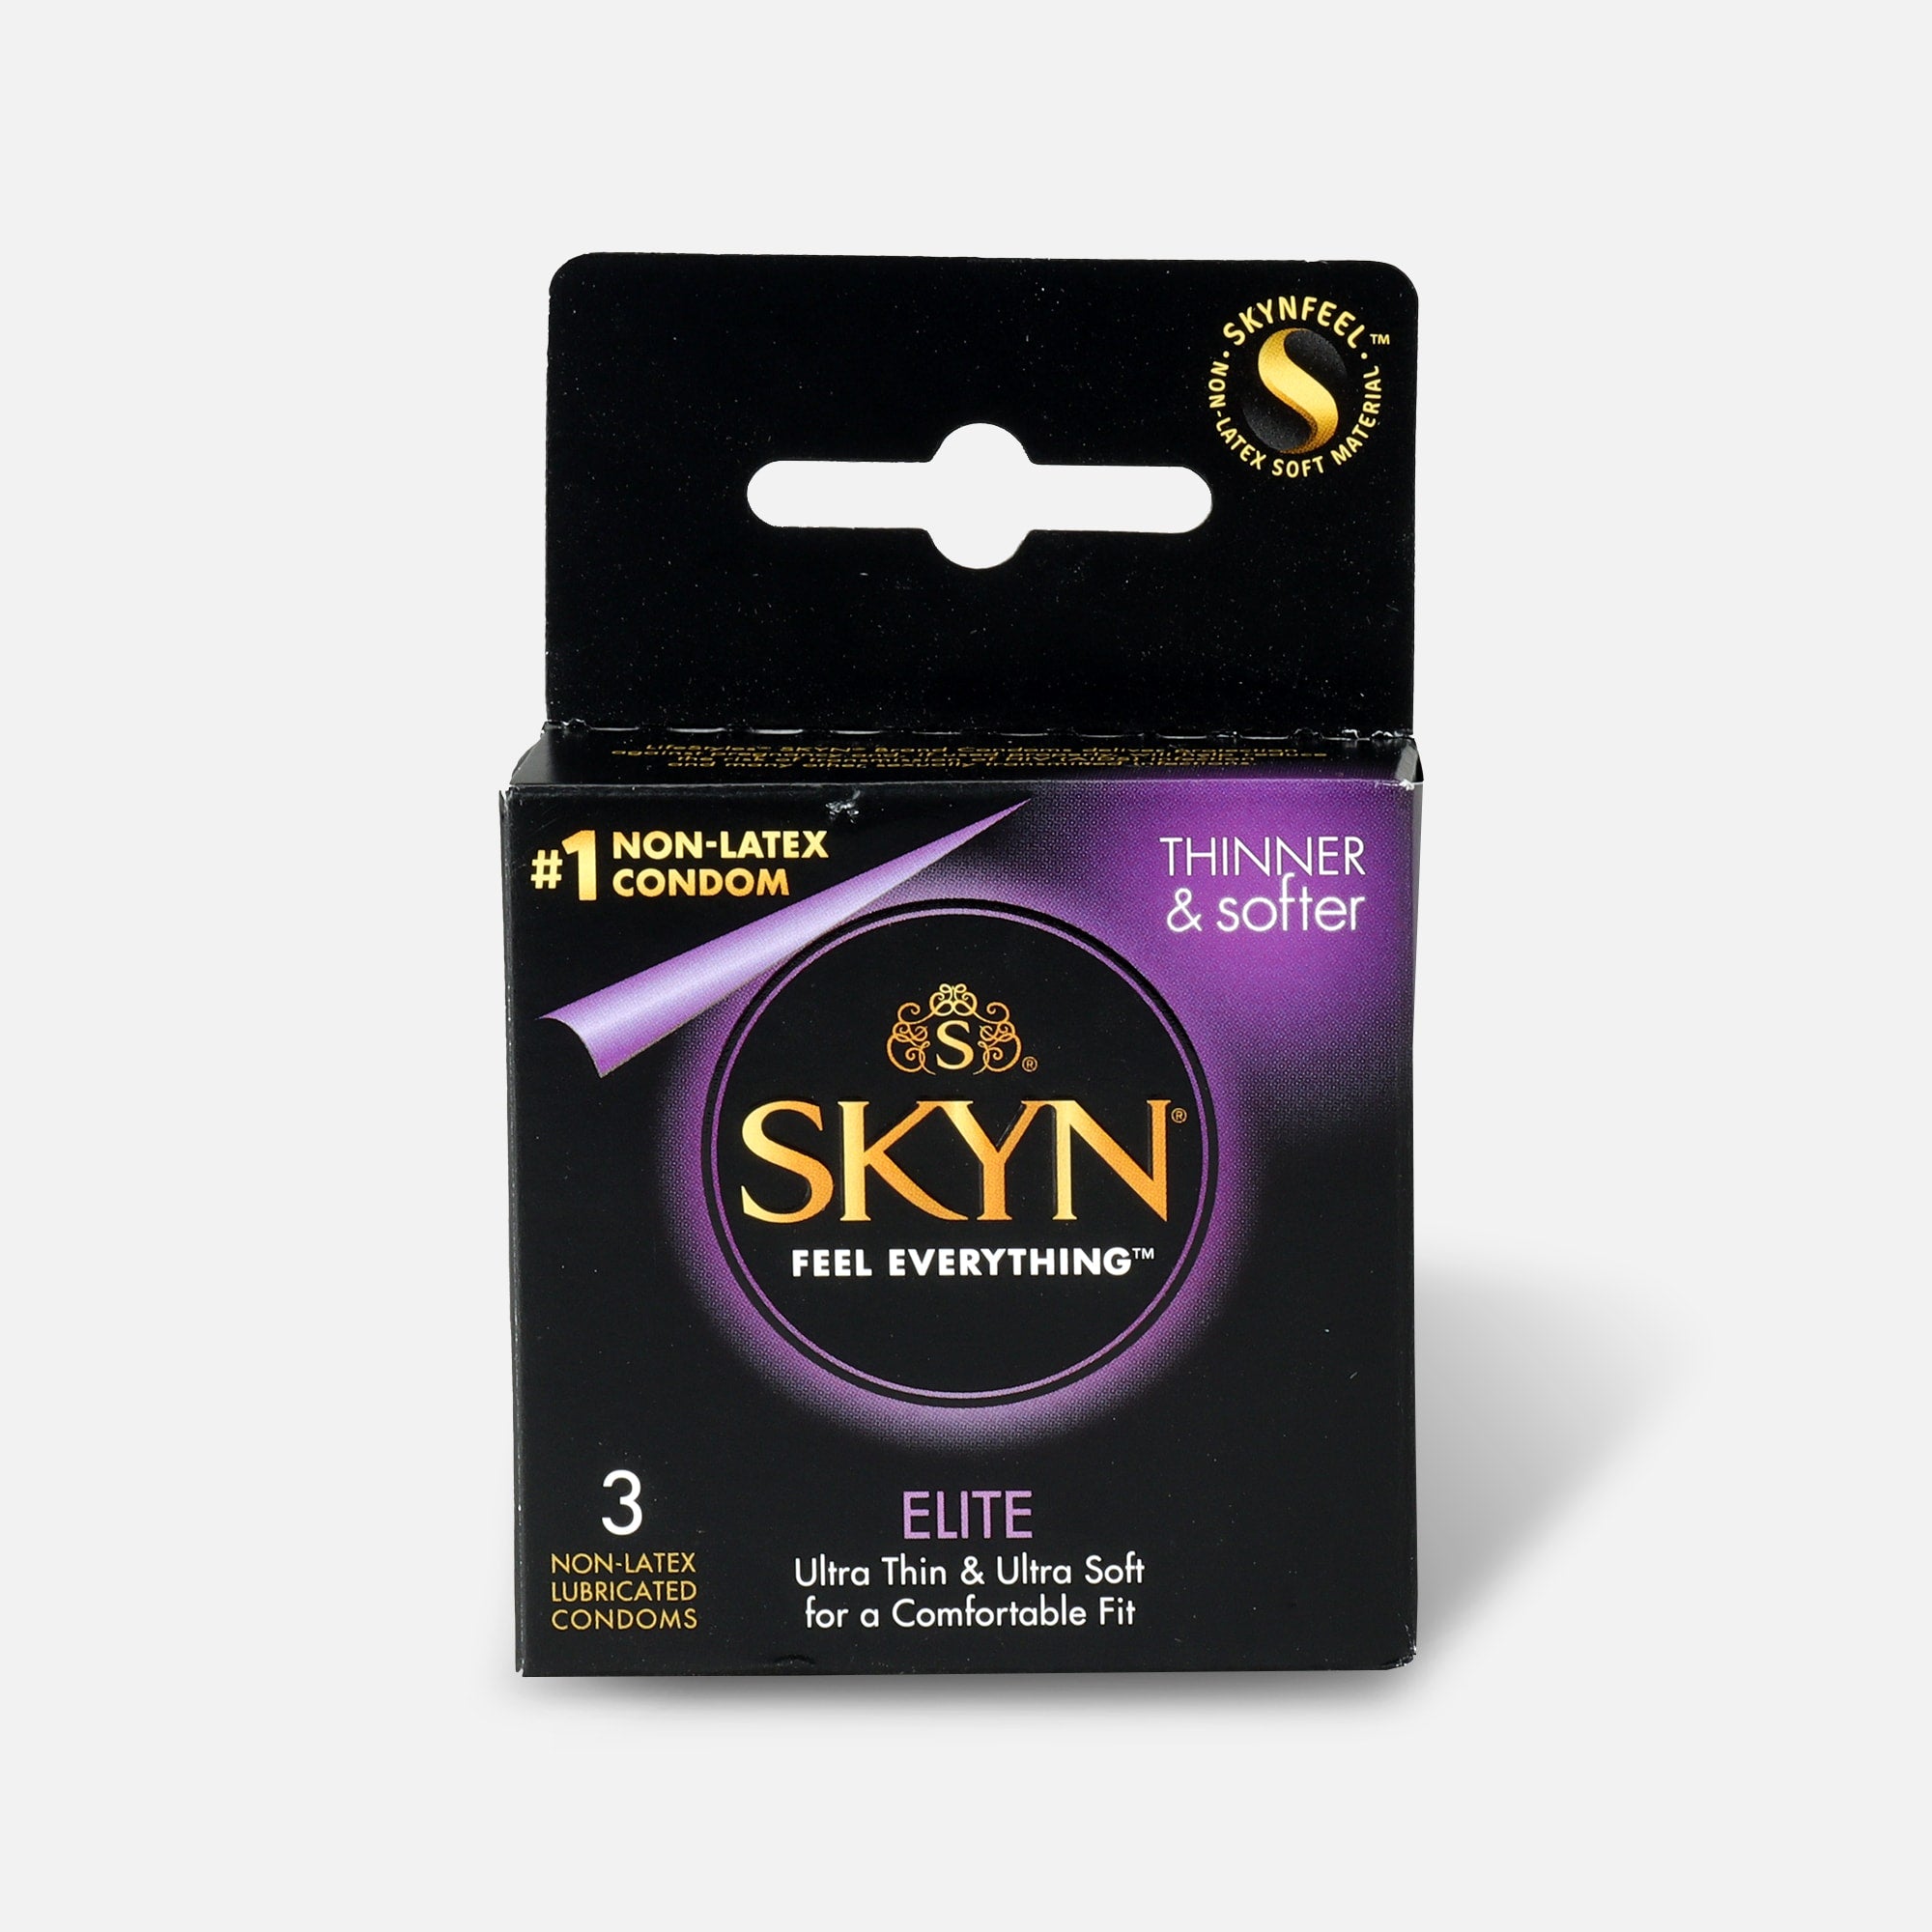 Lifestyles SKYN Elite Non Latex Lubricated Condoms 3-Pack